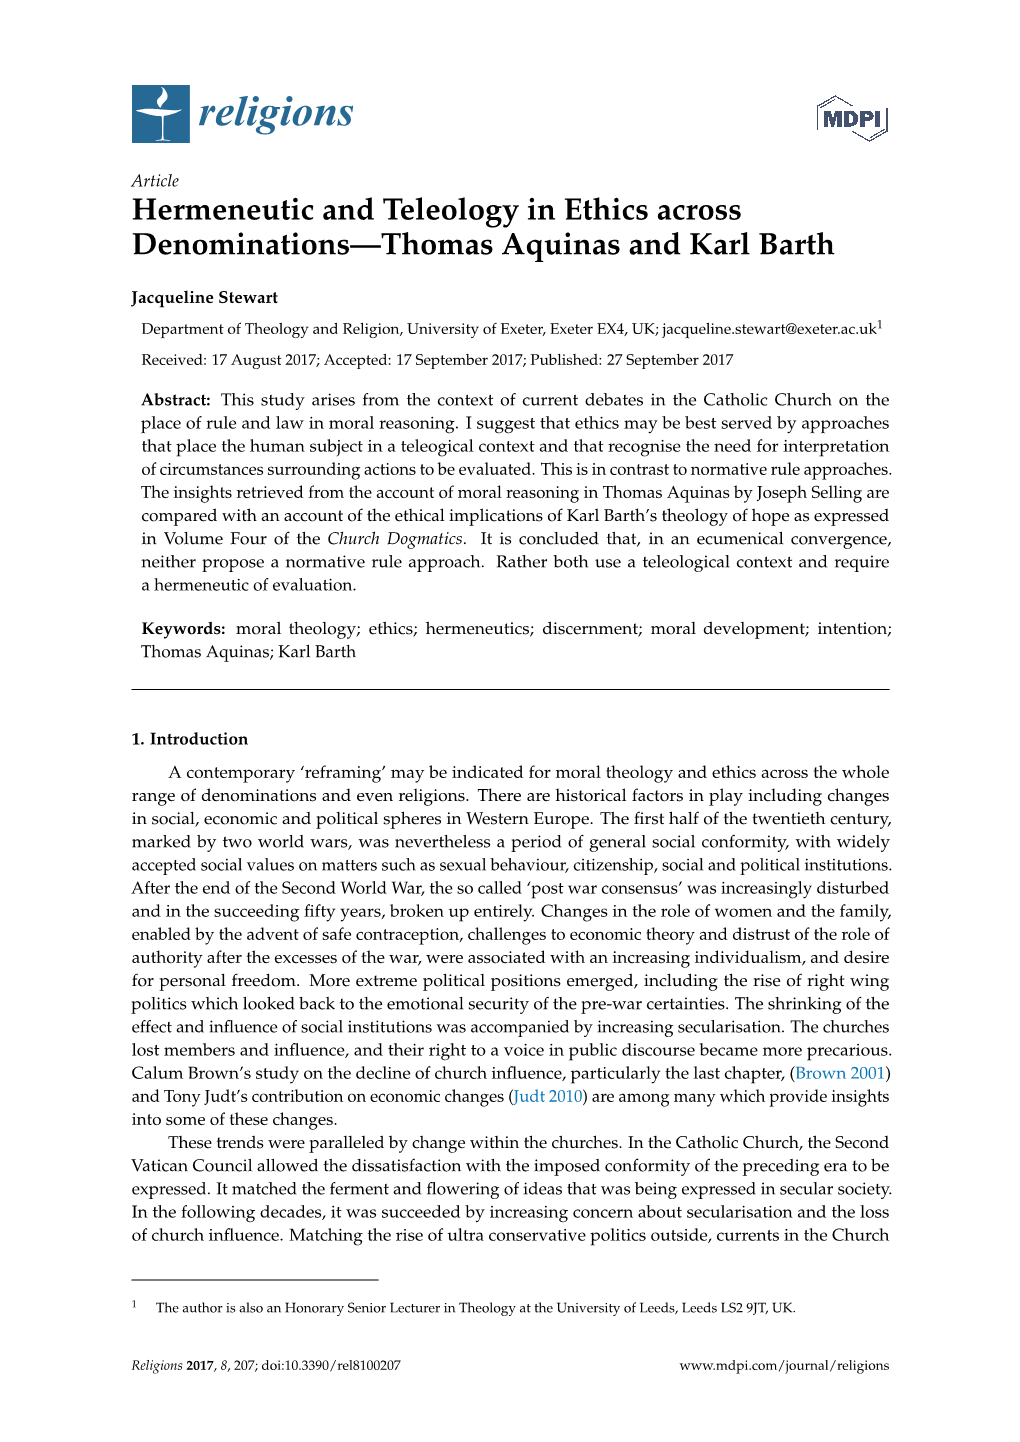 Hermeneutic and Teleology in Ethics Across Denominations—Thomas Aquinas and Karl Barth